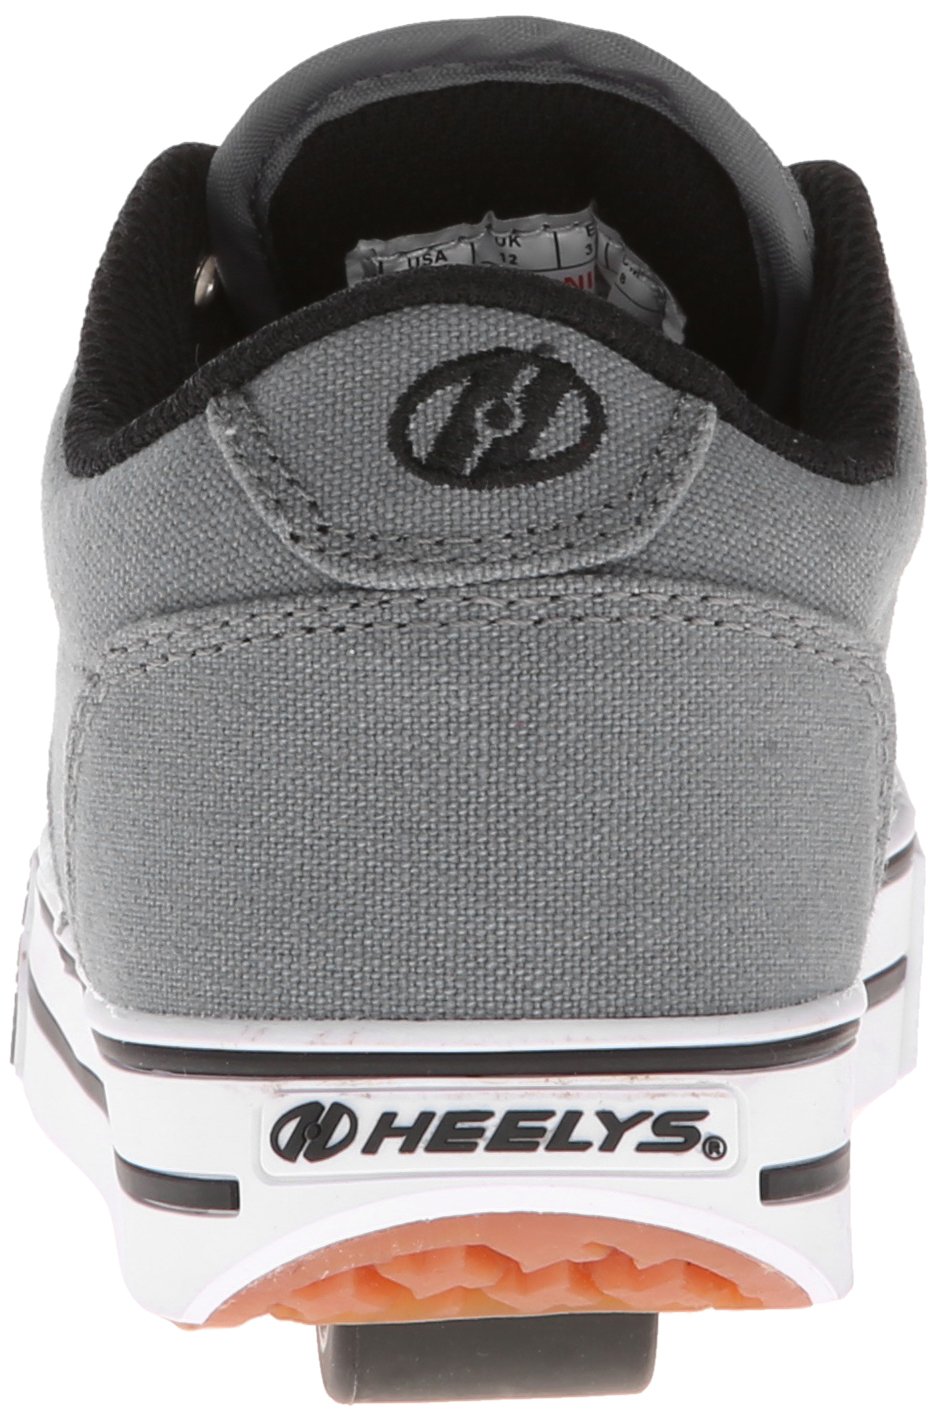 Heelys Launch Skate Shoe (Little Kid/Big Kid),Grey,2 M US Little Kid